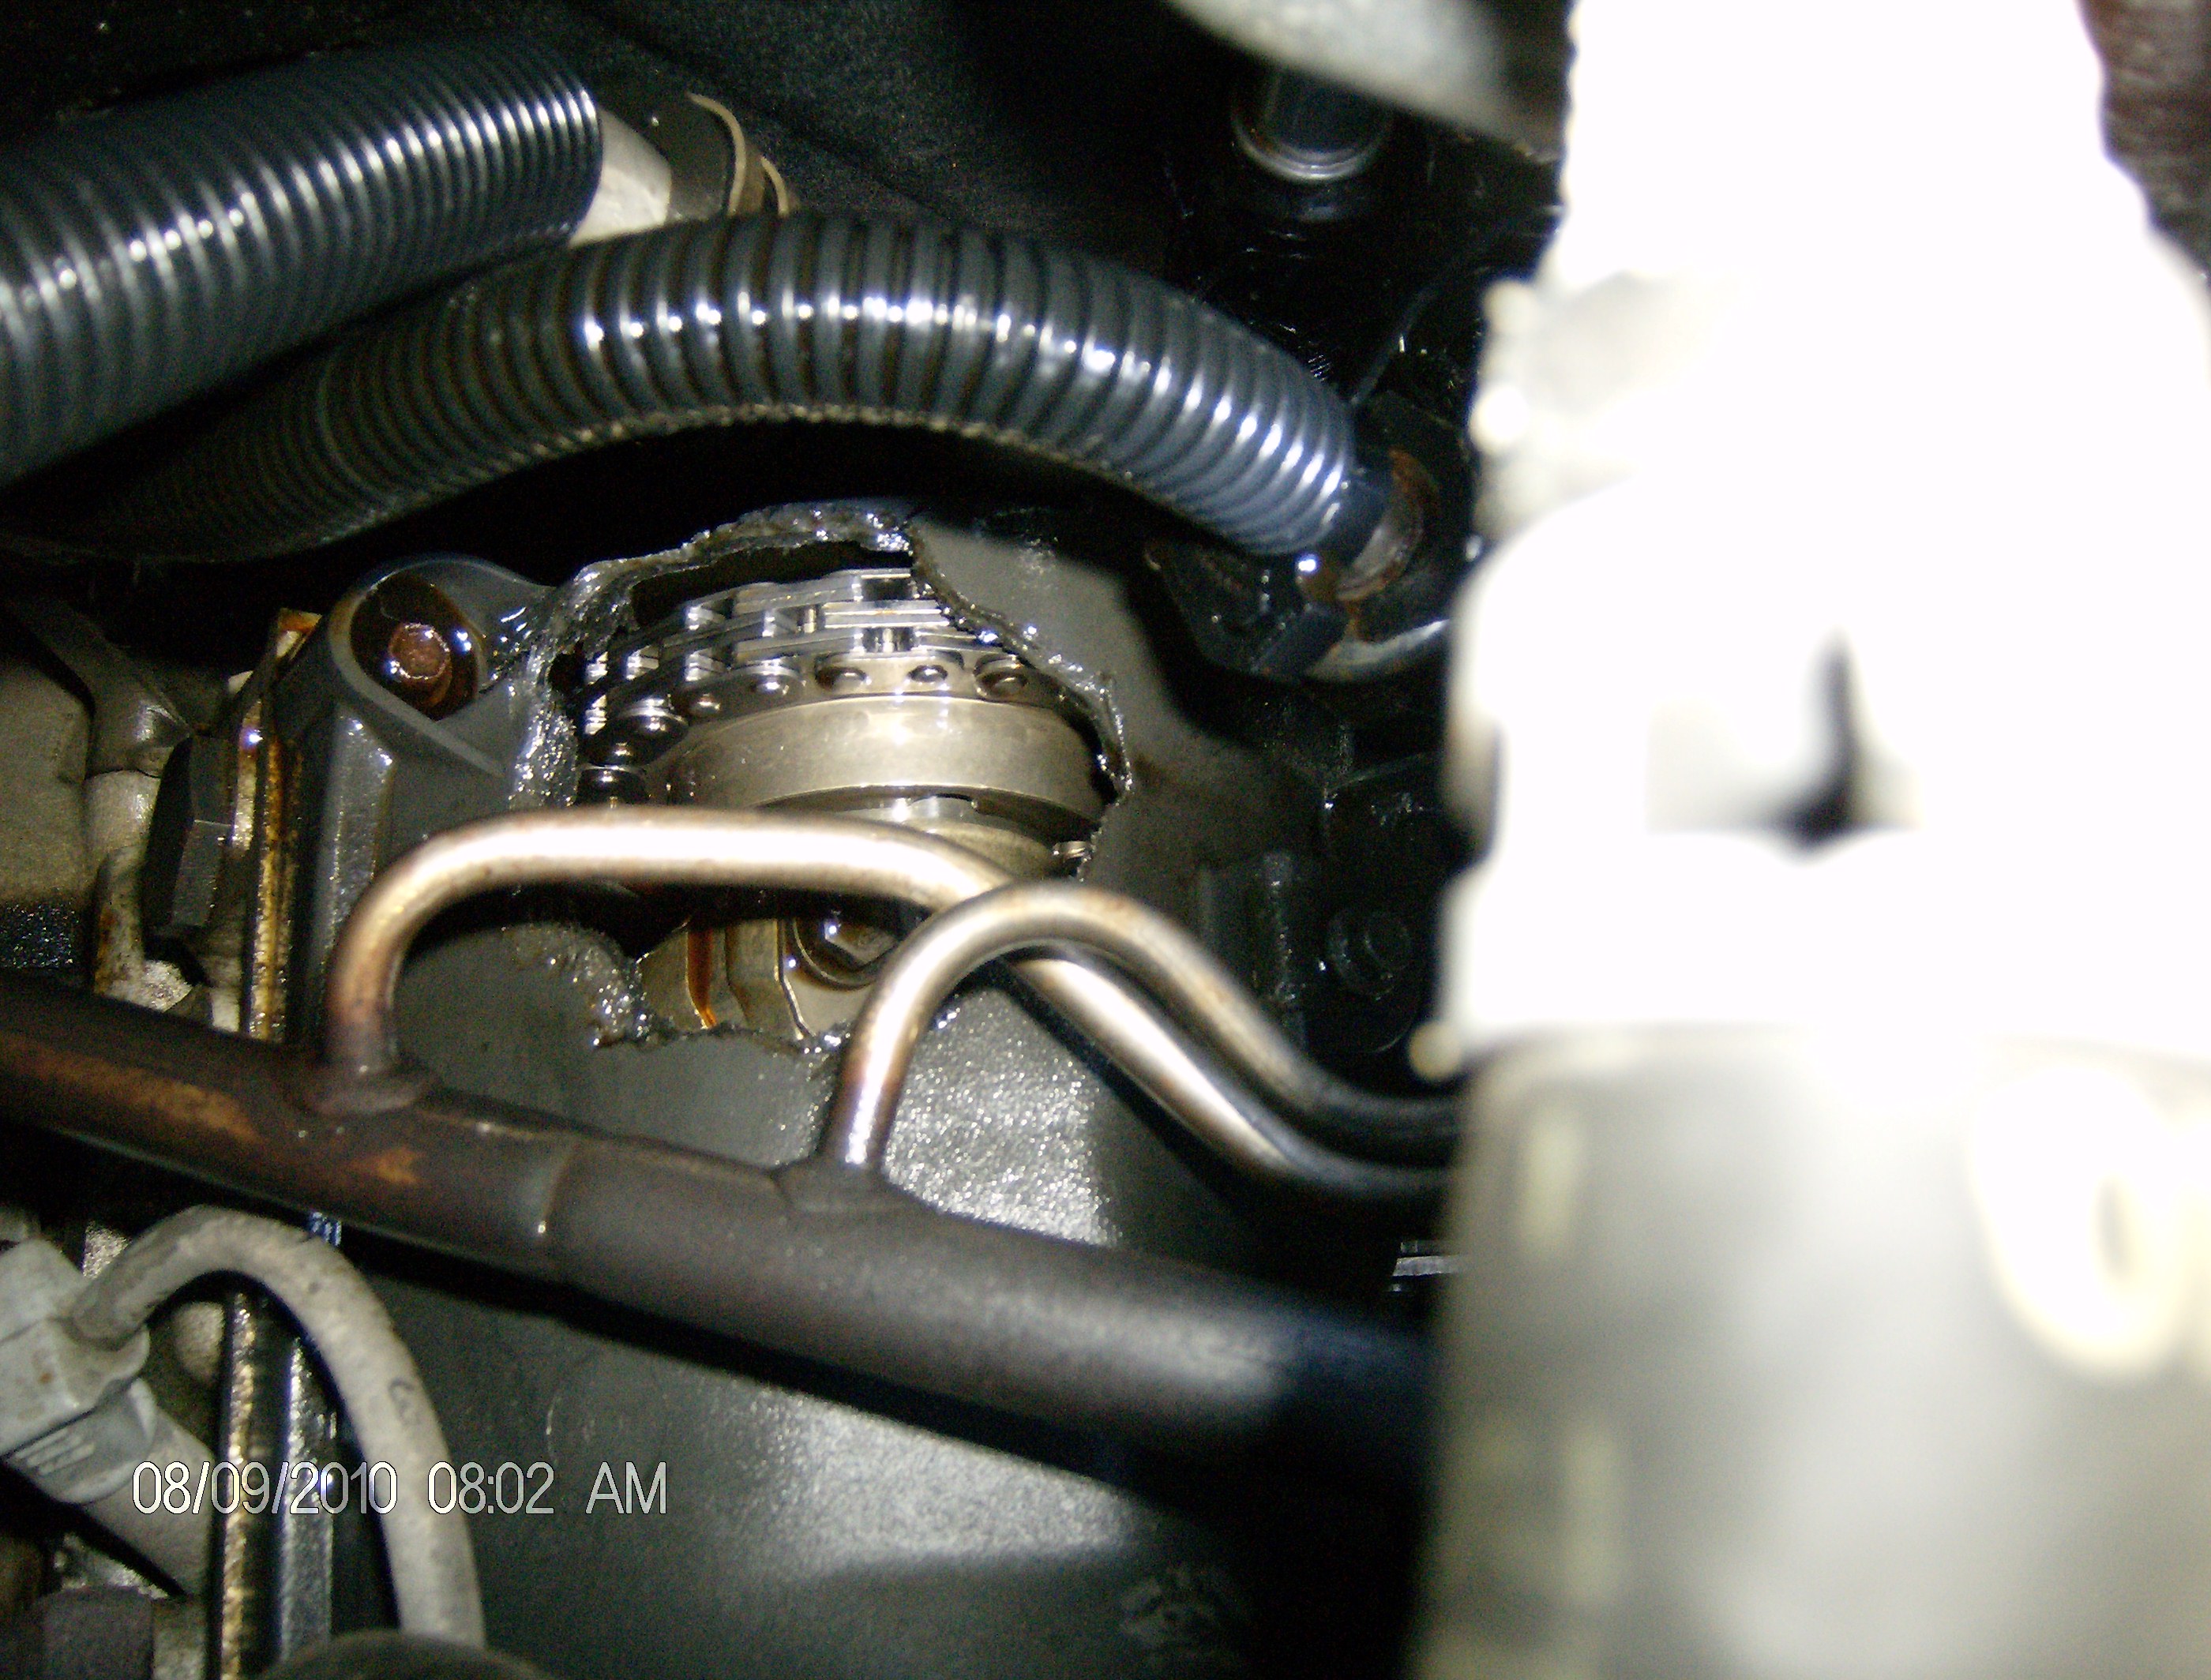 Blown valve cover